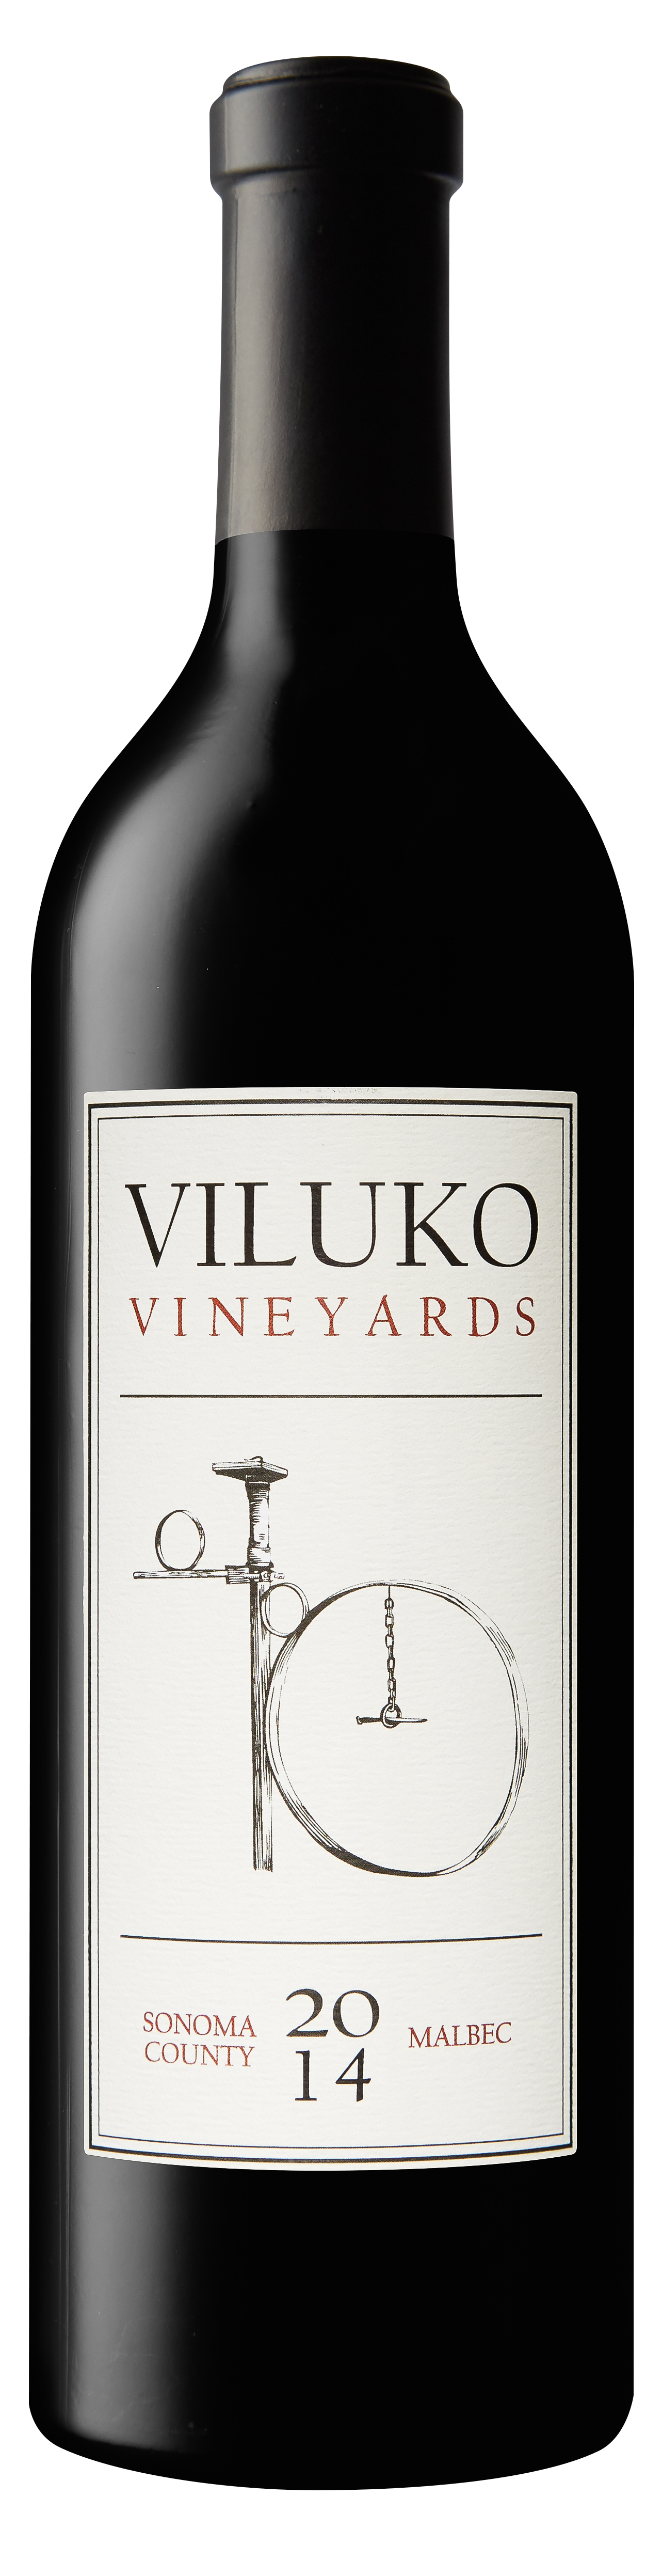 Product Image for 2014 Viluko Vineyards Malbec